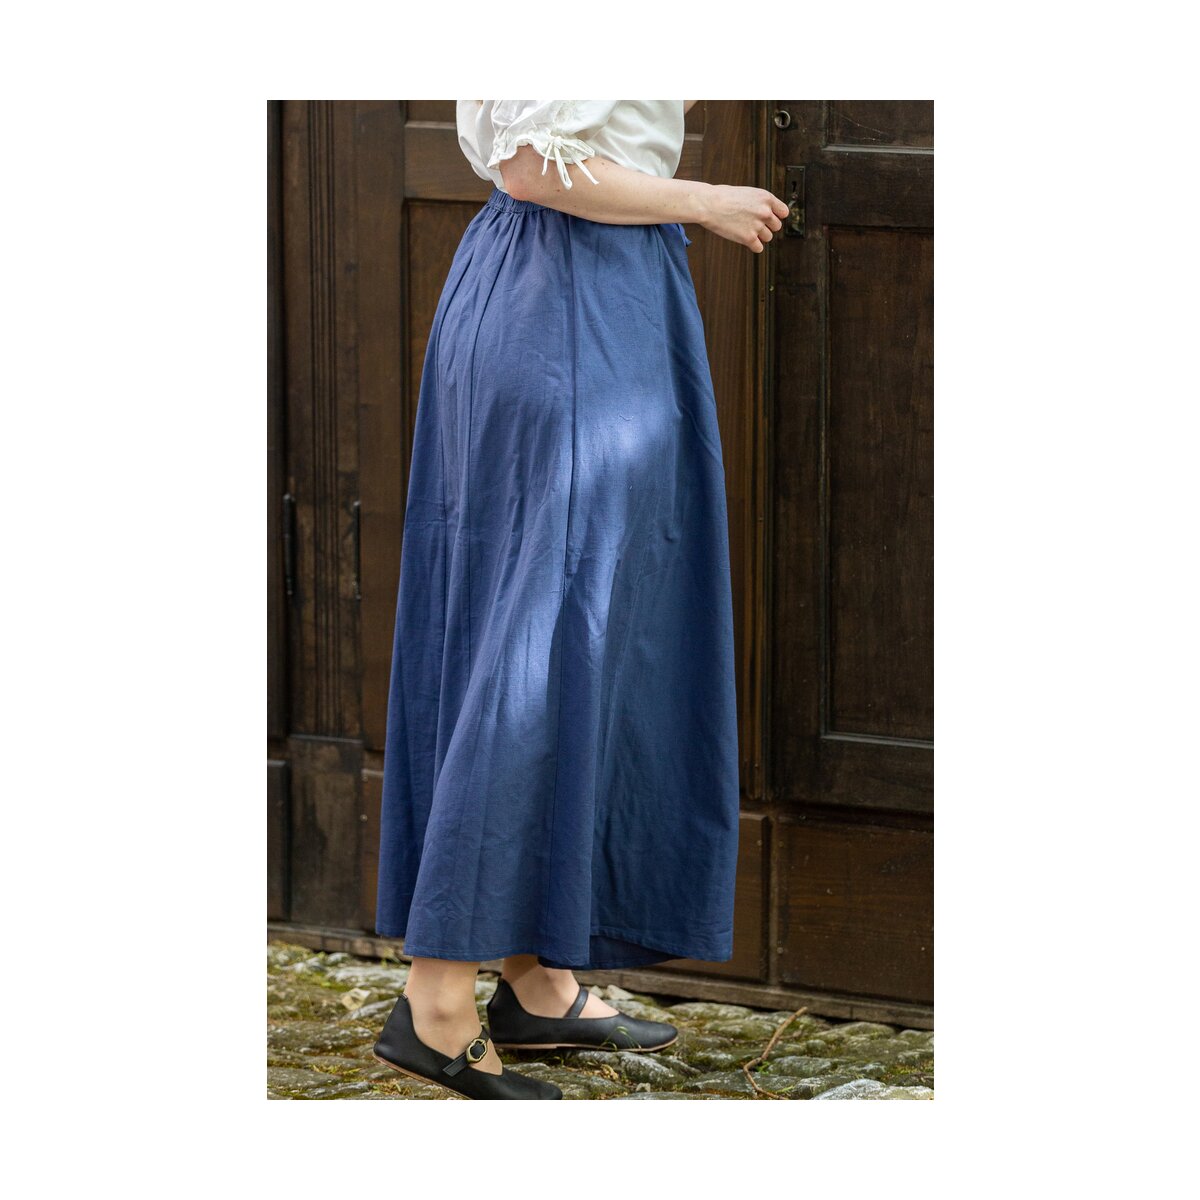 Medieval or Pirates Skirt "Dana" Blue